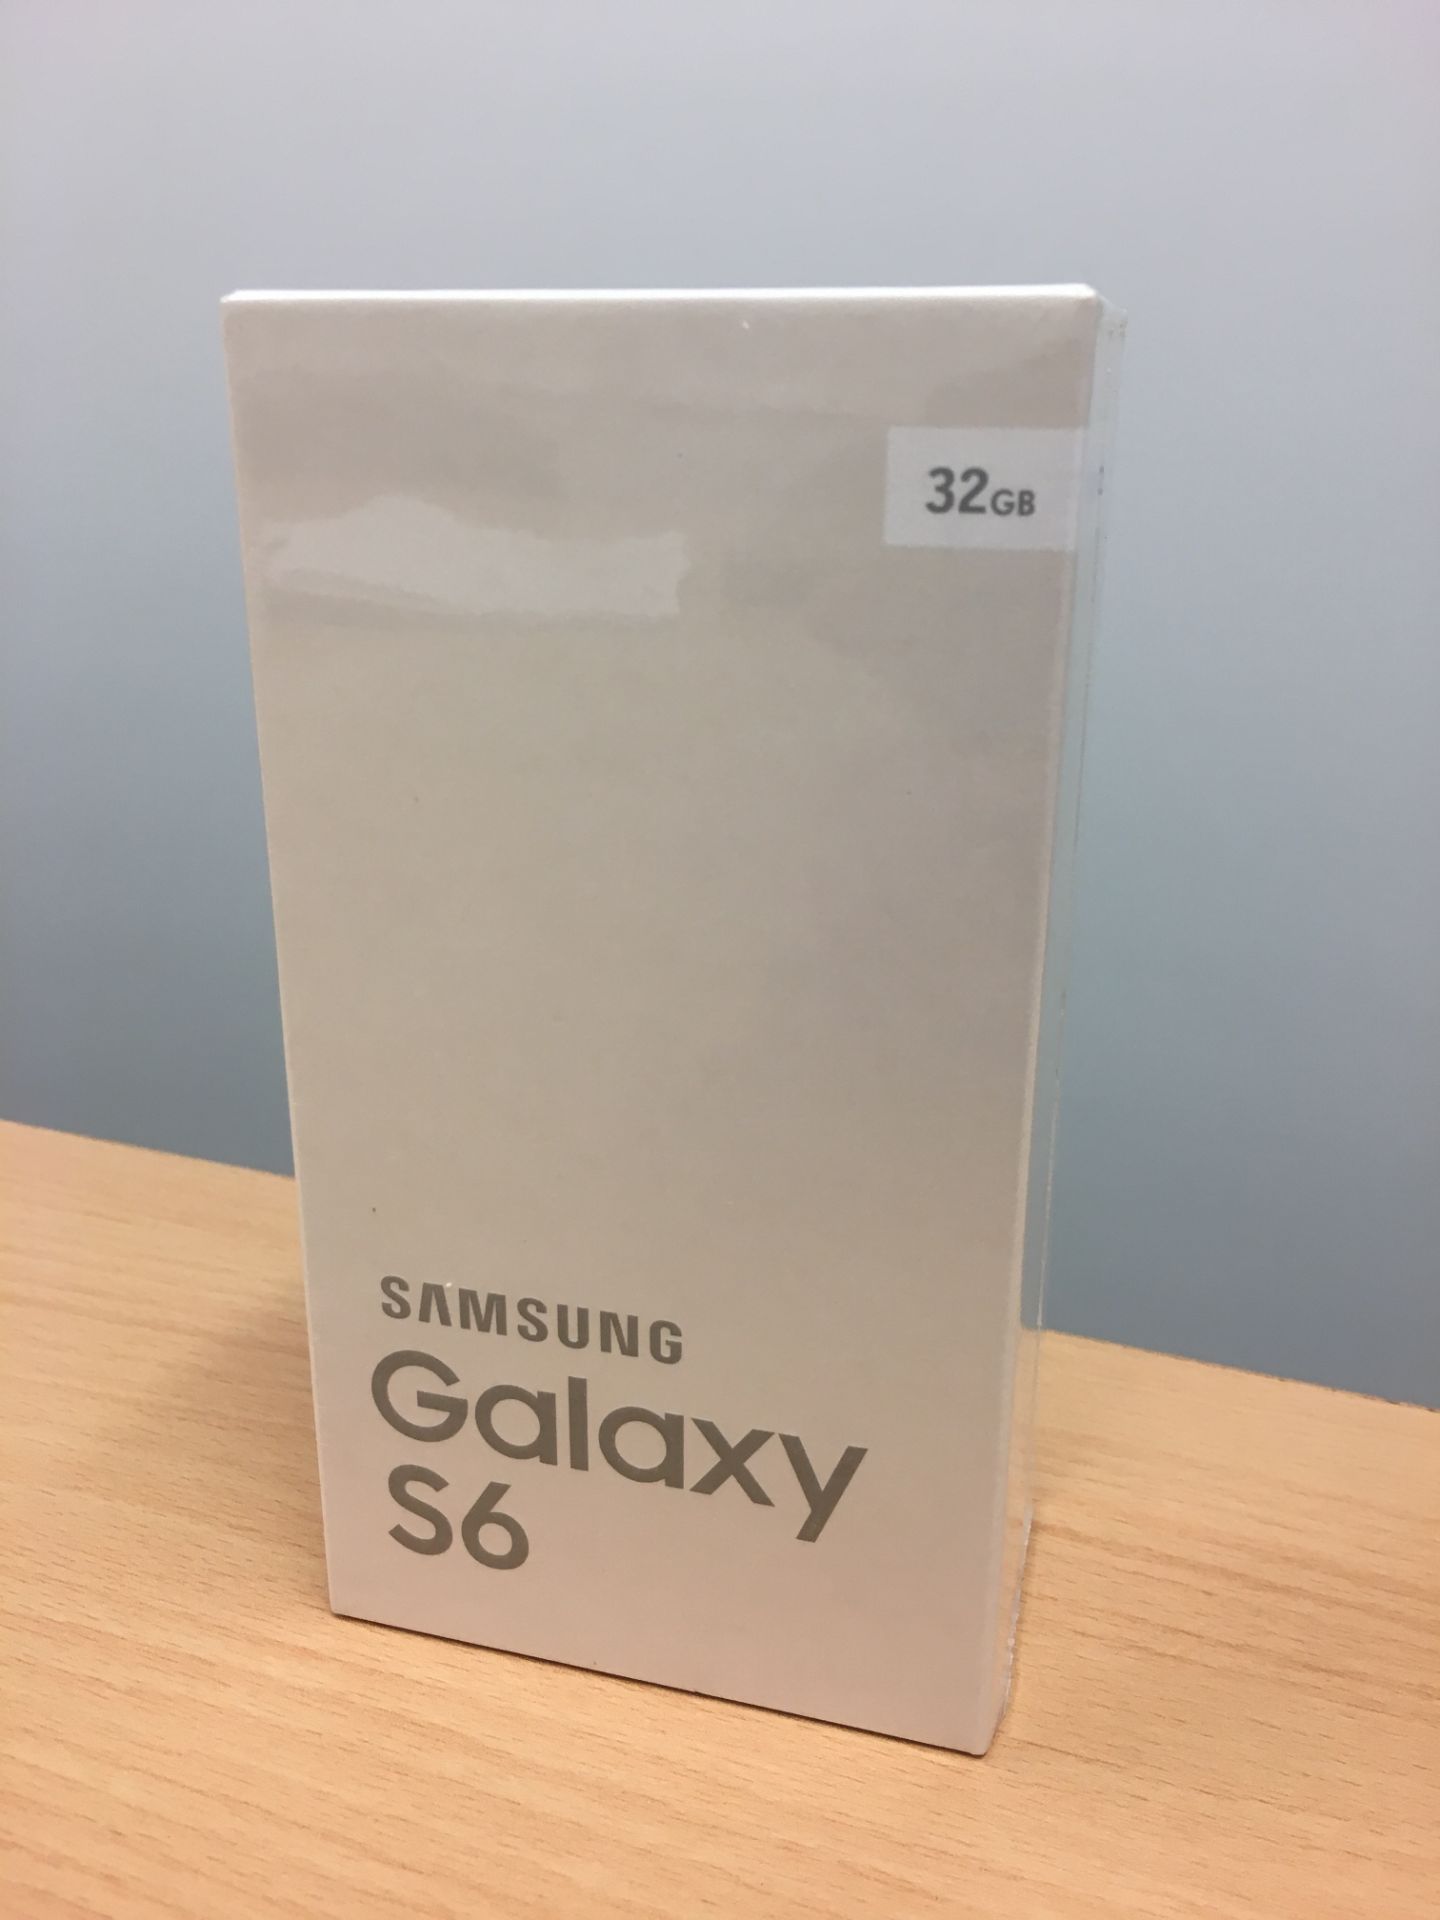 Grade A Samsung Galaxy S6 Phone - 16MP Camera - 5.1" Screen - Boxed - Colours May Vary - Available - Image 4 of 4